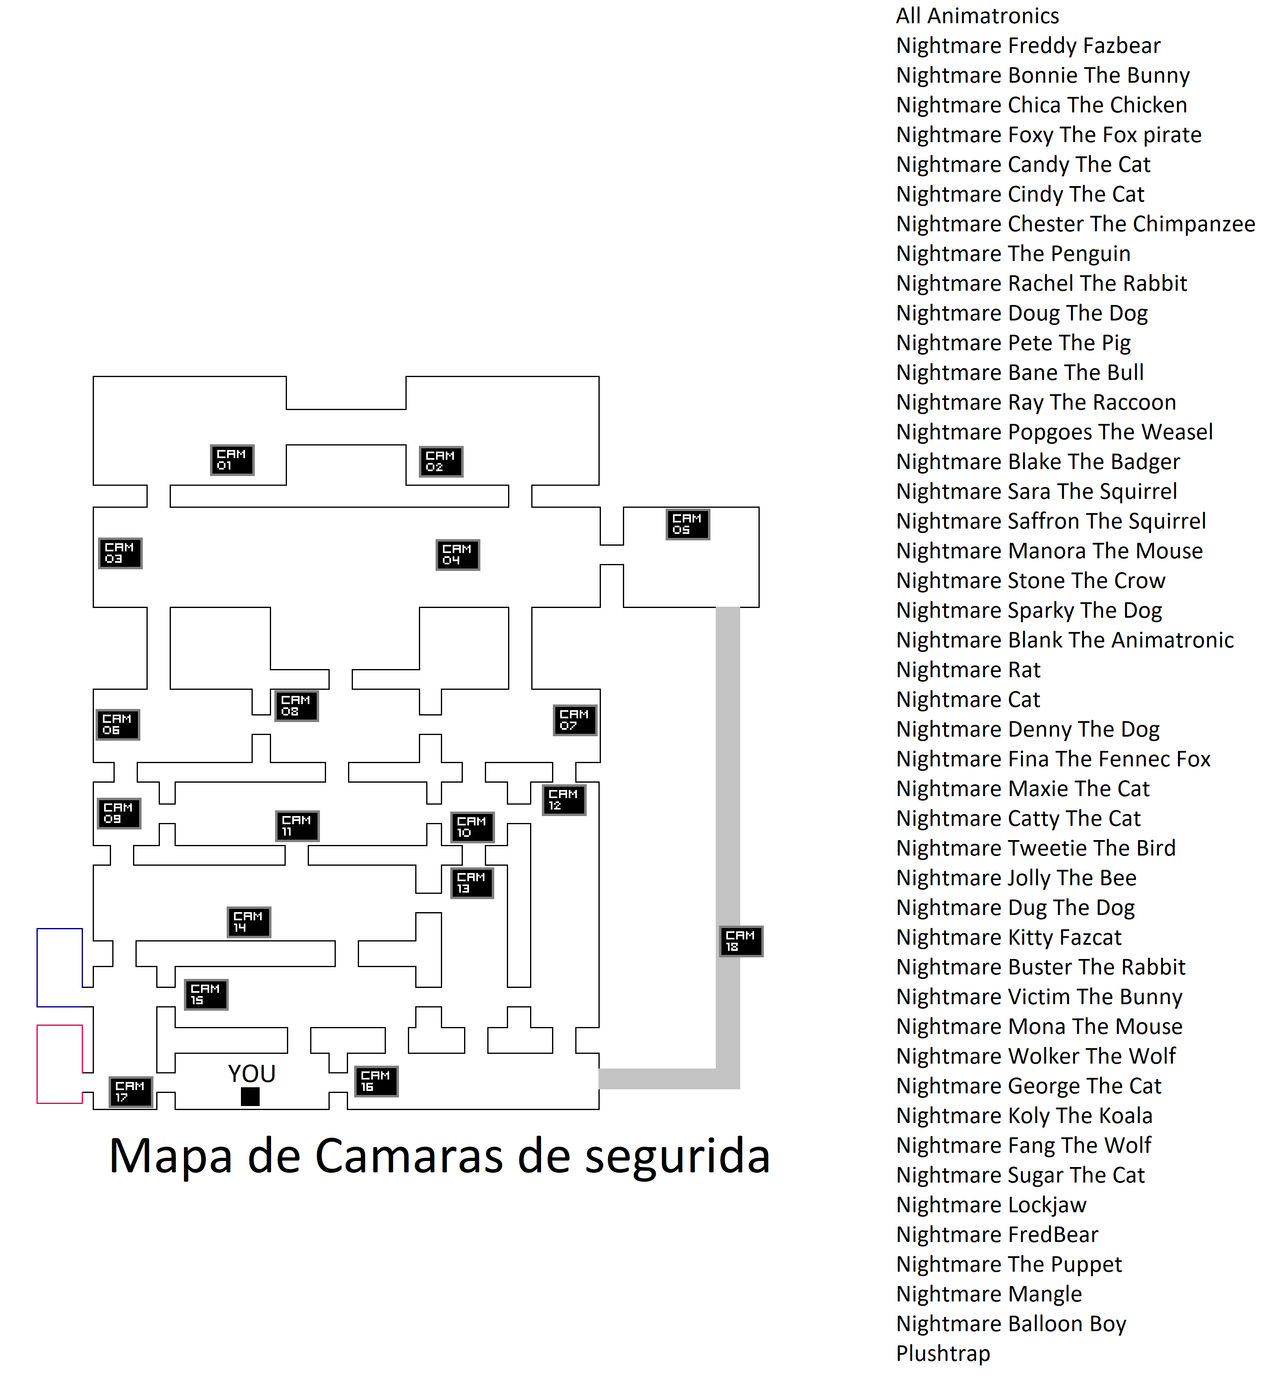 FNaP 2 - Map Cameras! by ABAnimatio on DeviantArt